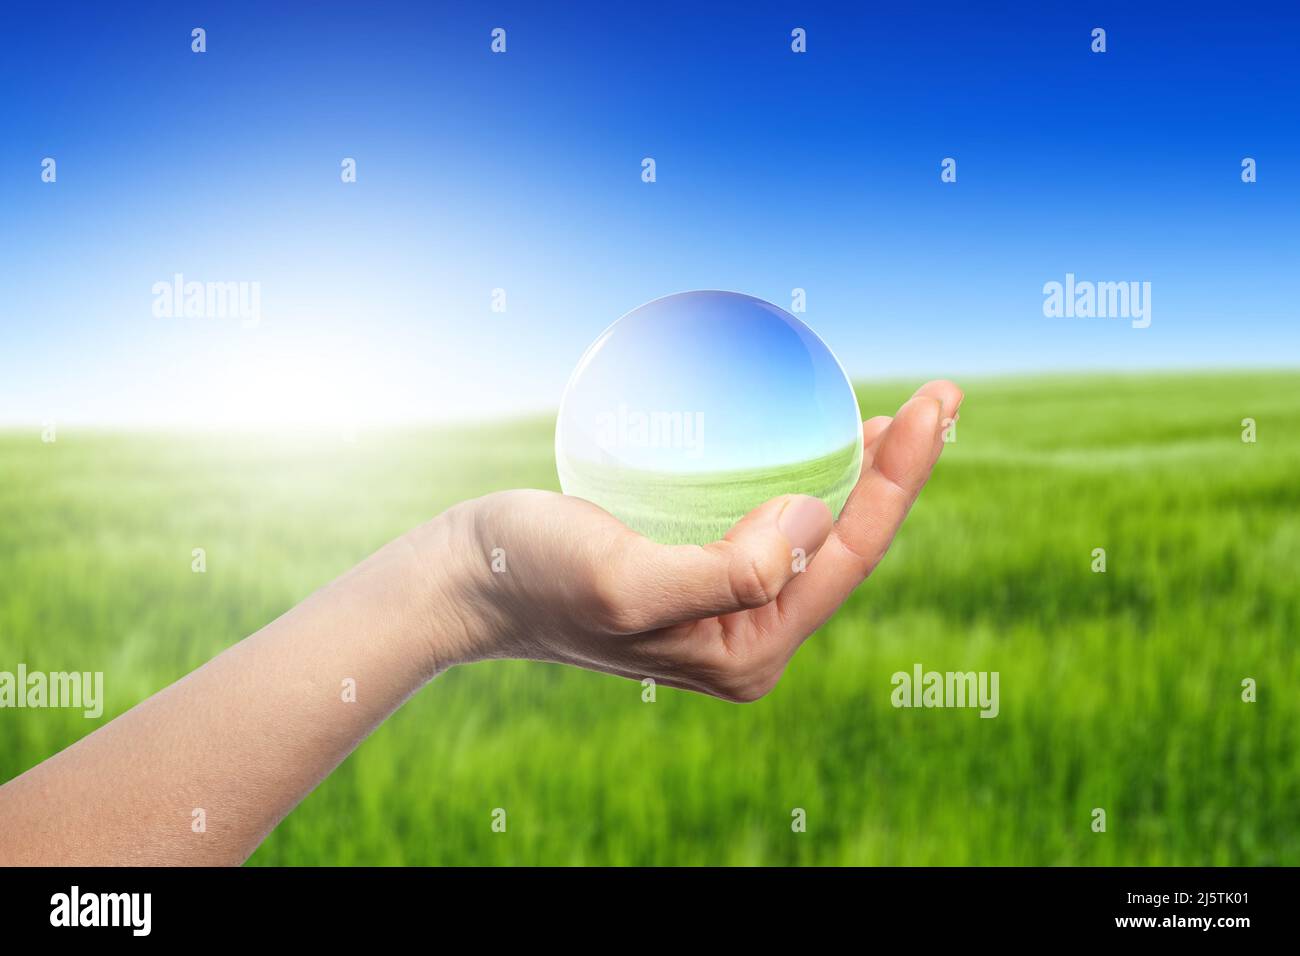 Hände halten Globenglas in grünem Gras Feld - Umwelt-Konzept Stockfoto